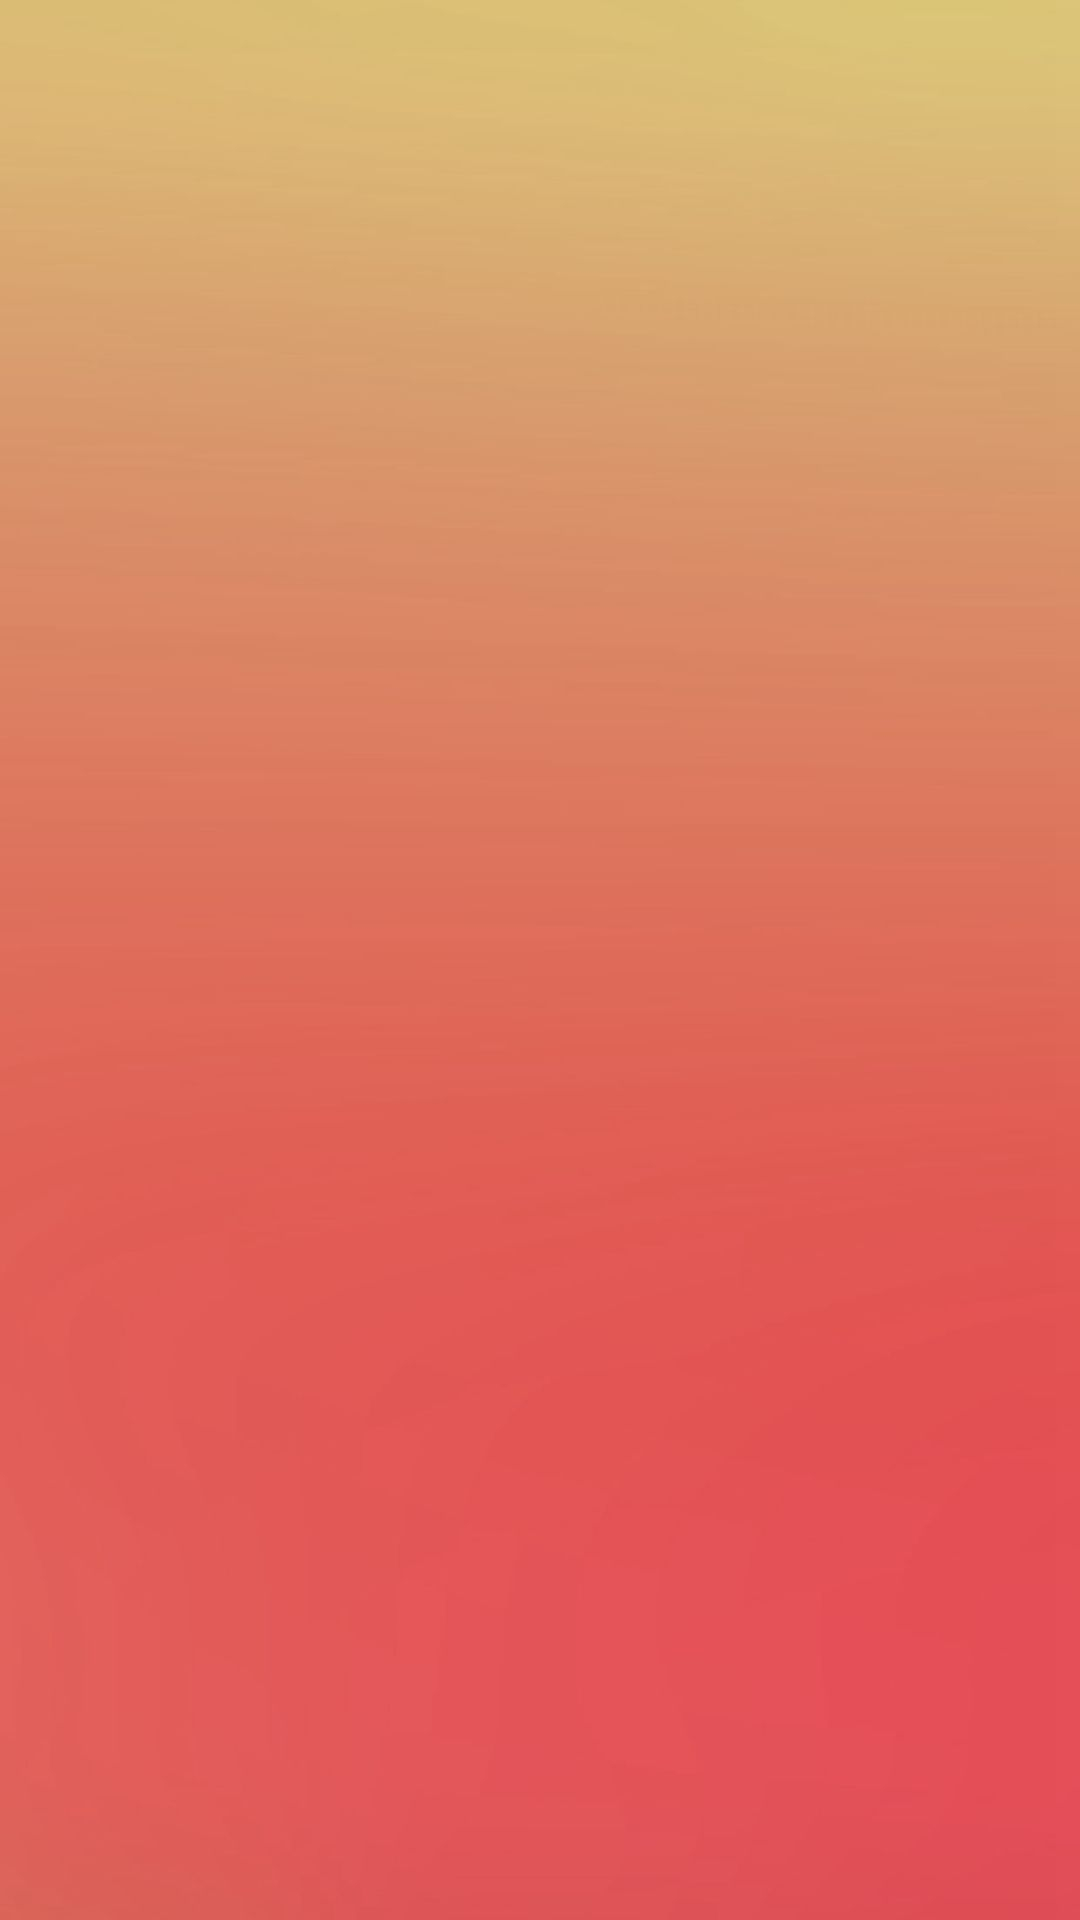 1080x1920 Sun Red Orange Gradation Blur iPhone 6 Wallpaper Download | iPhone Wallpapers, iPad wallpapers One-stop Downloa&acirc;&#128;&brvbar; | Villeroy und boch, Au&Atilde;&#159;enfarben, Perkal bettw&Atilde;&curren;sche